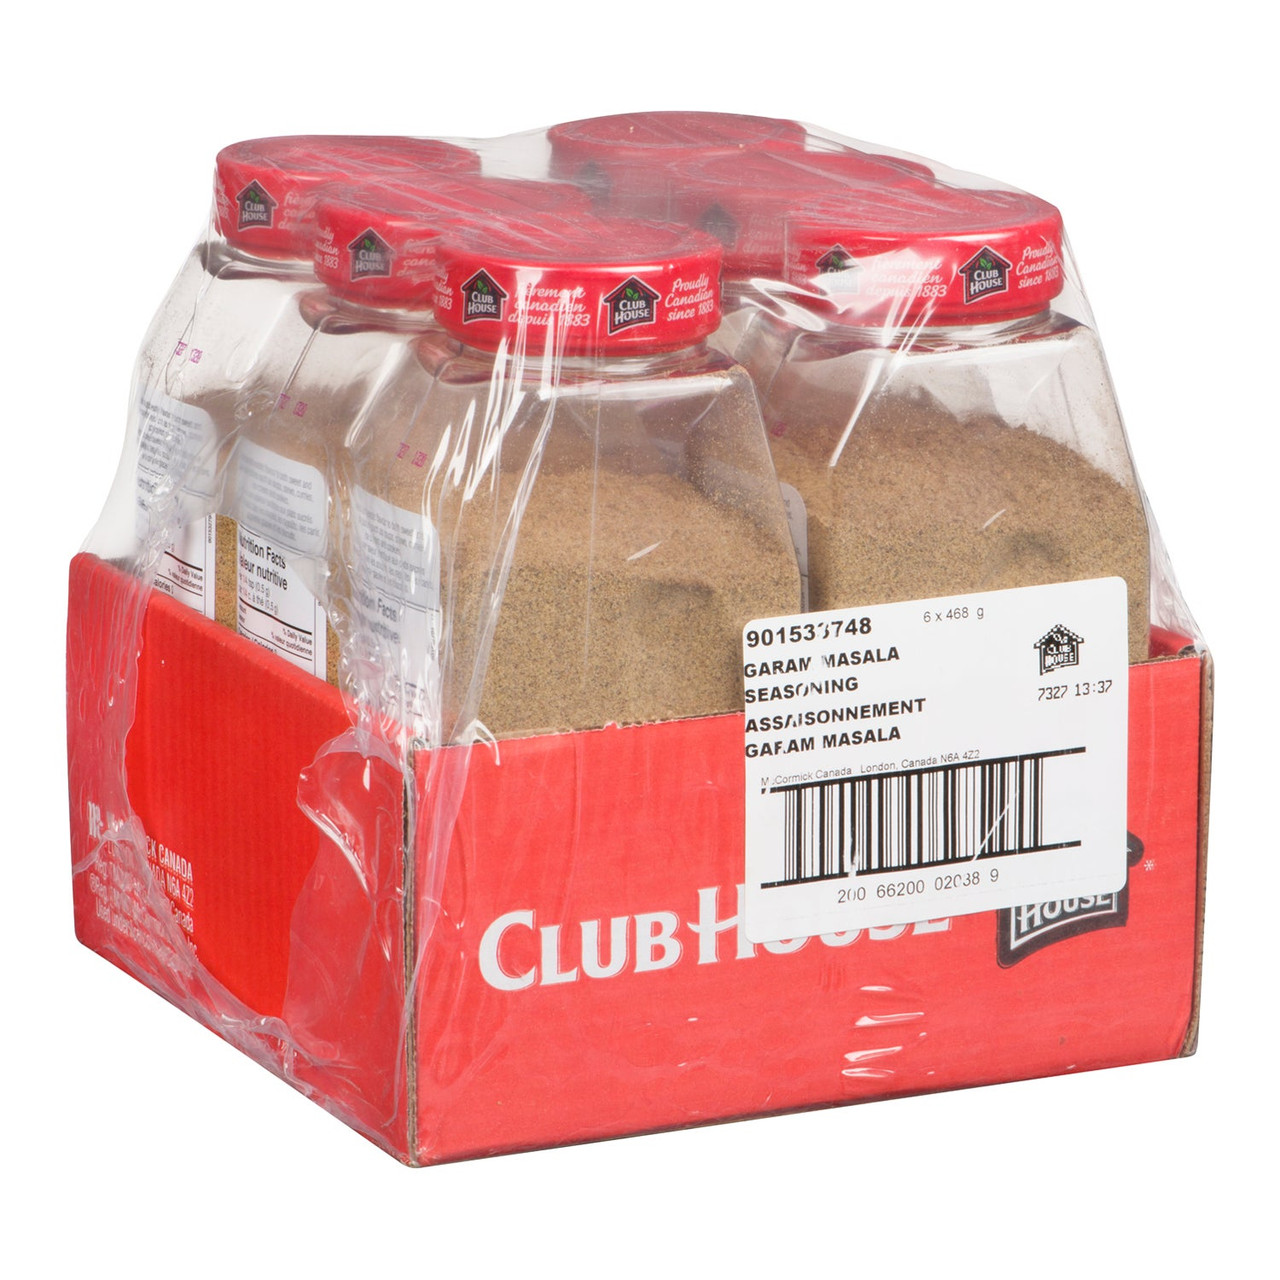 Clubhouse Garam Masala Seasoning | 468G/Unit, 6 Units/Case